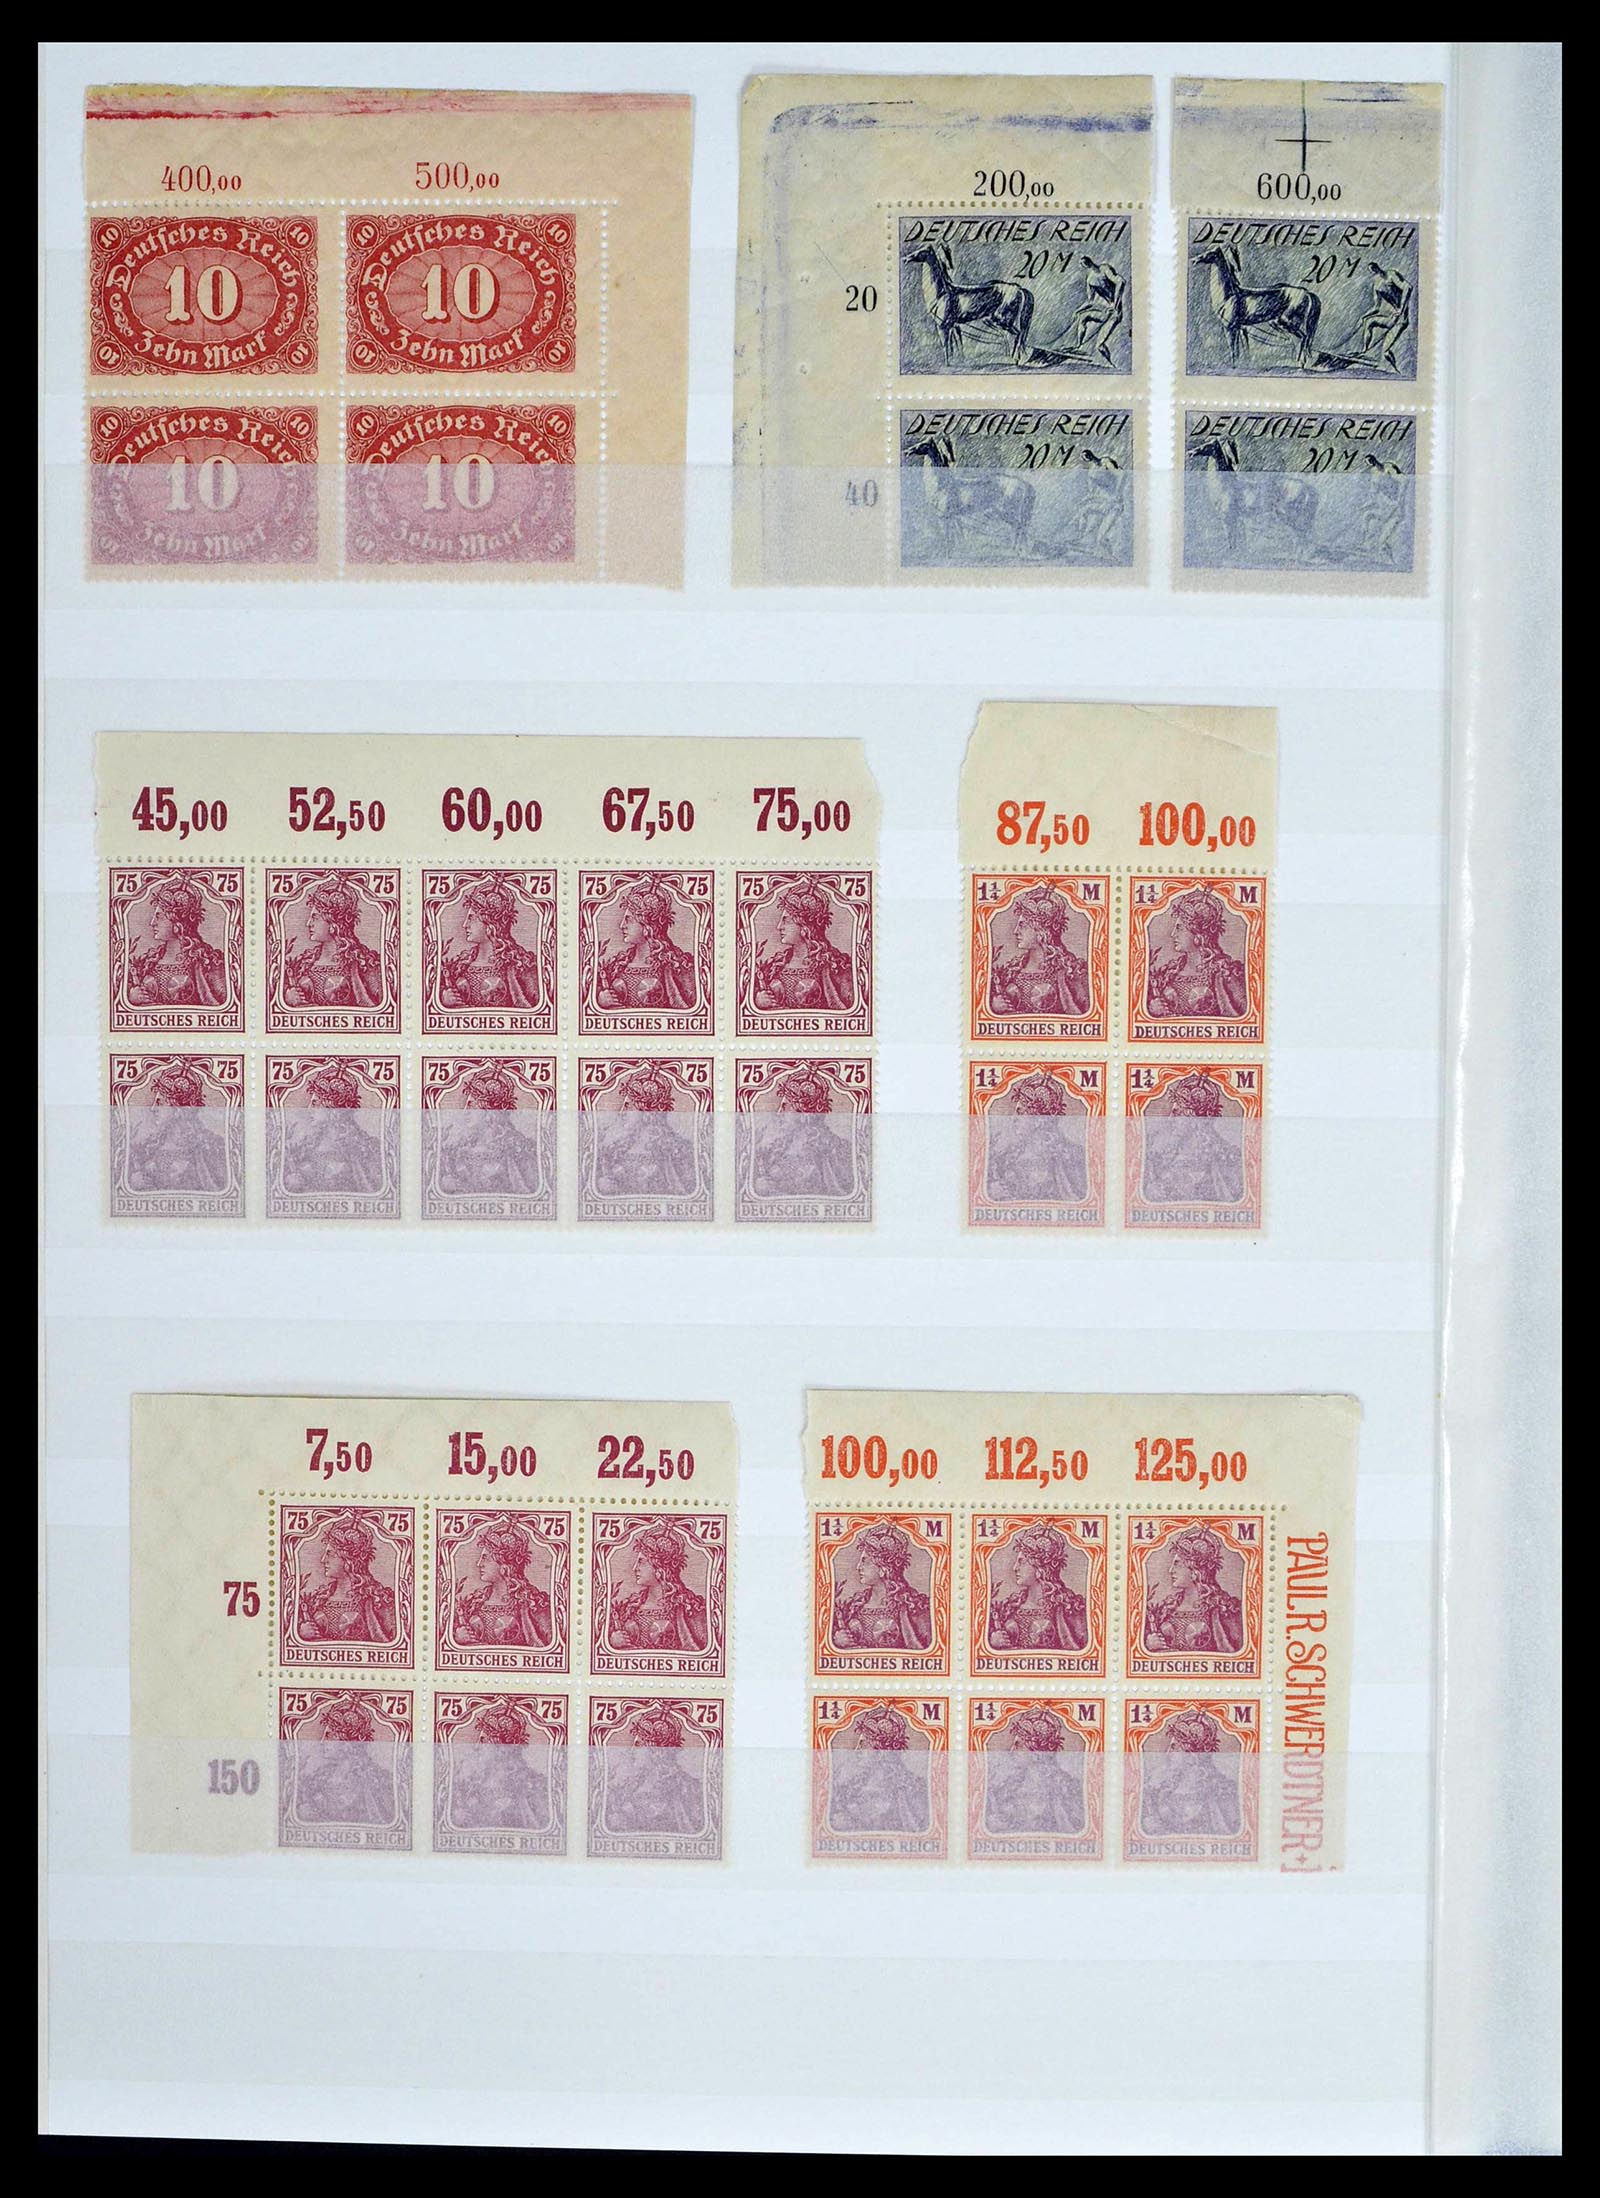 39254 0020 - Stamp collection 39254 German Reich MNH top margins.